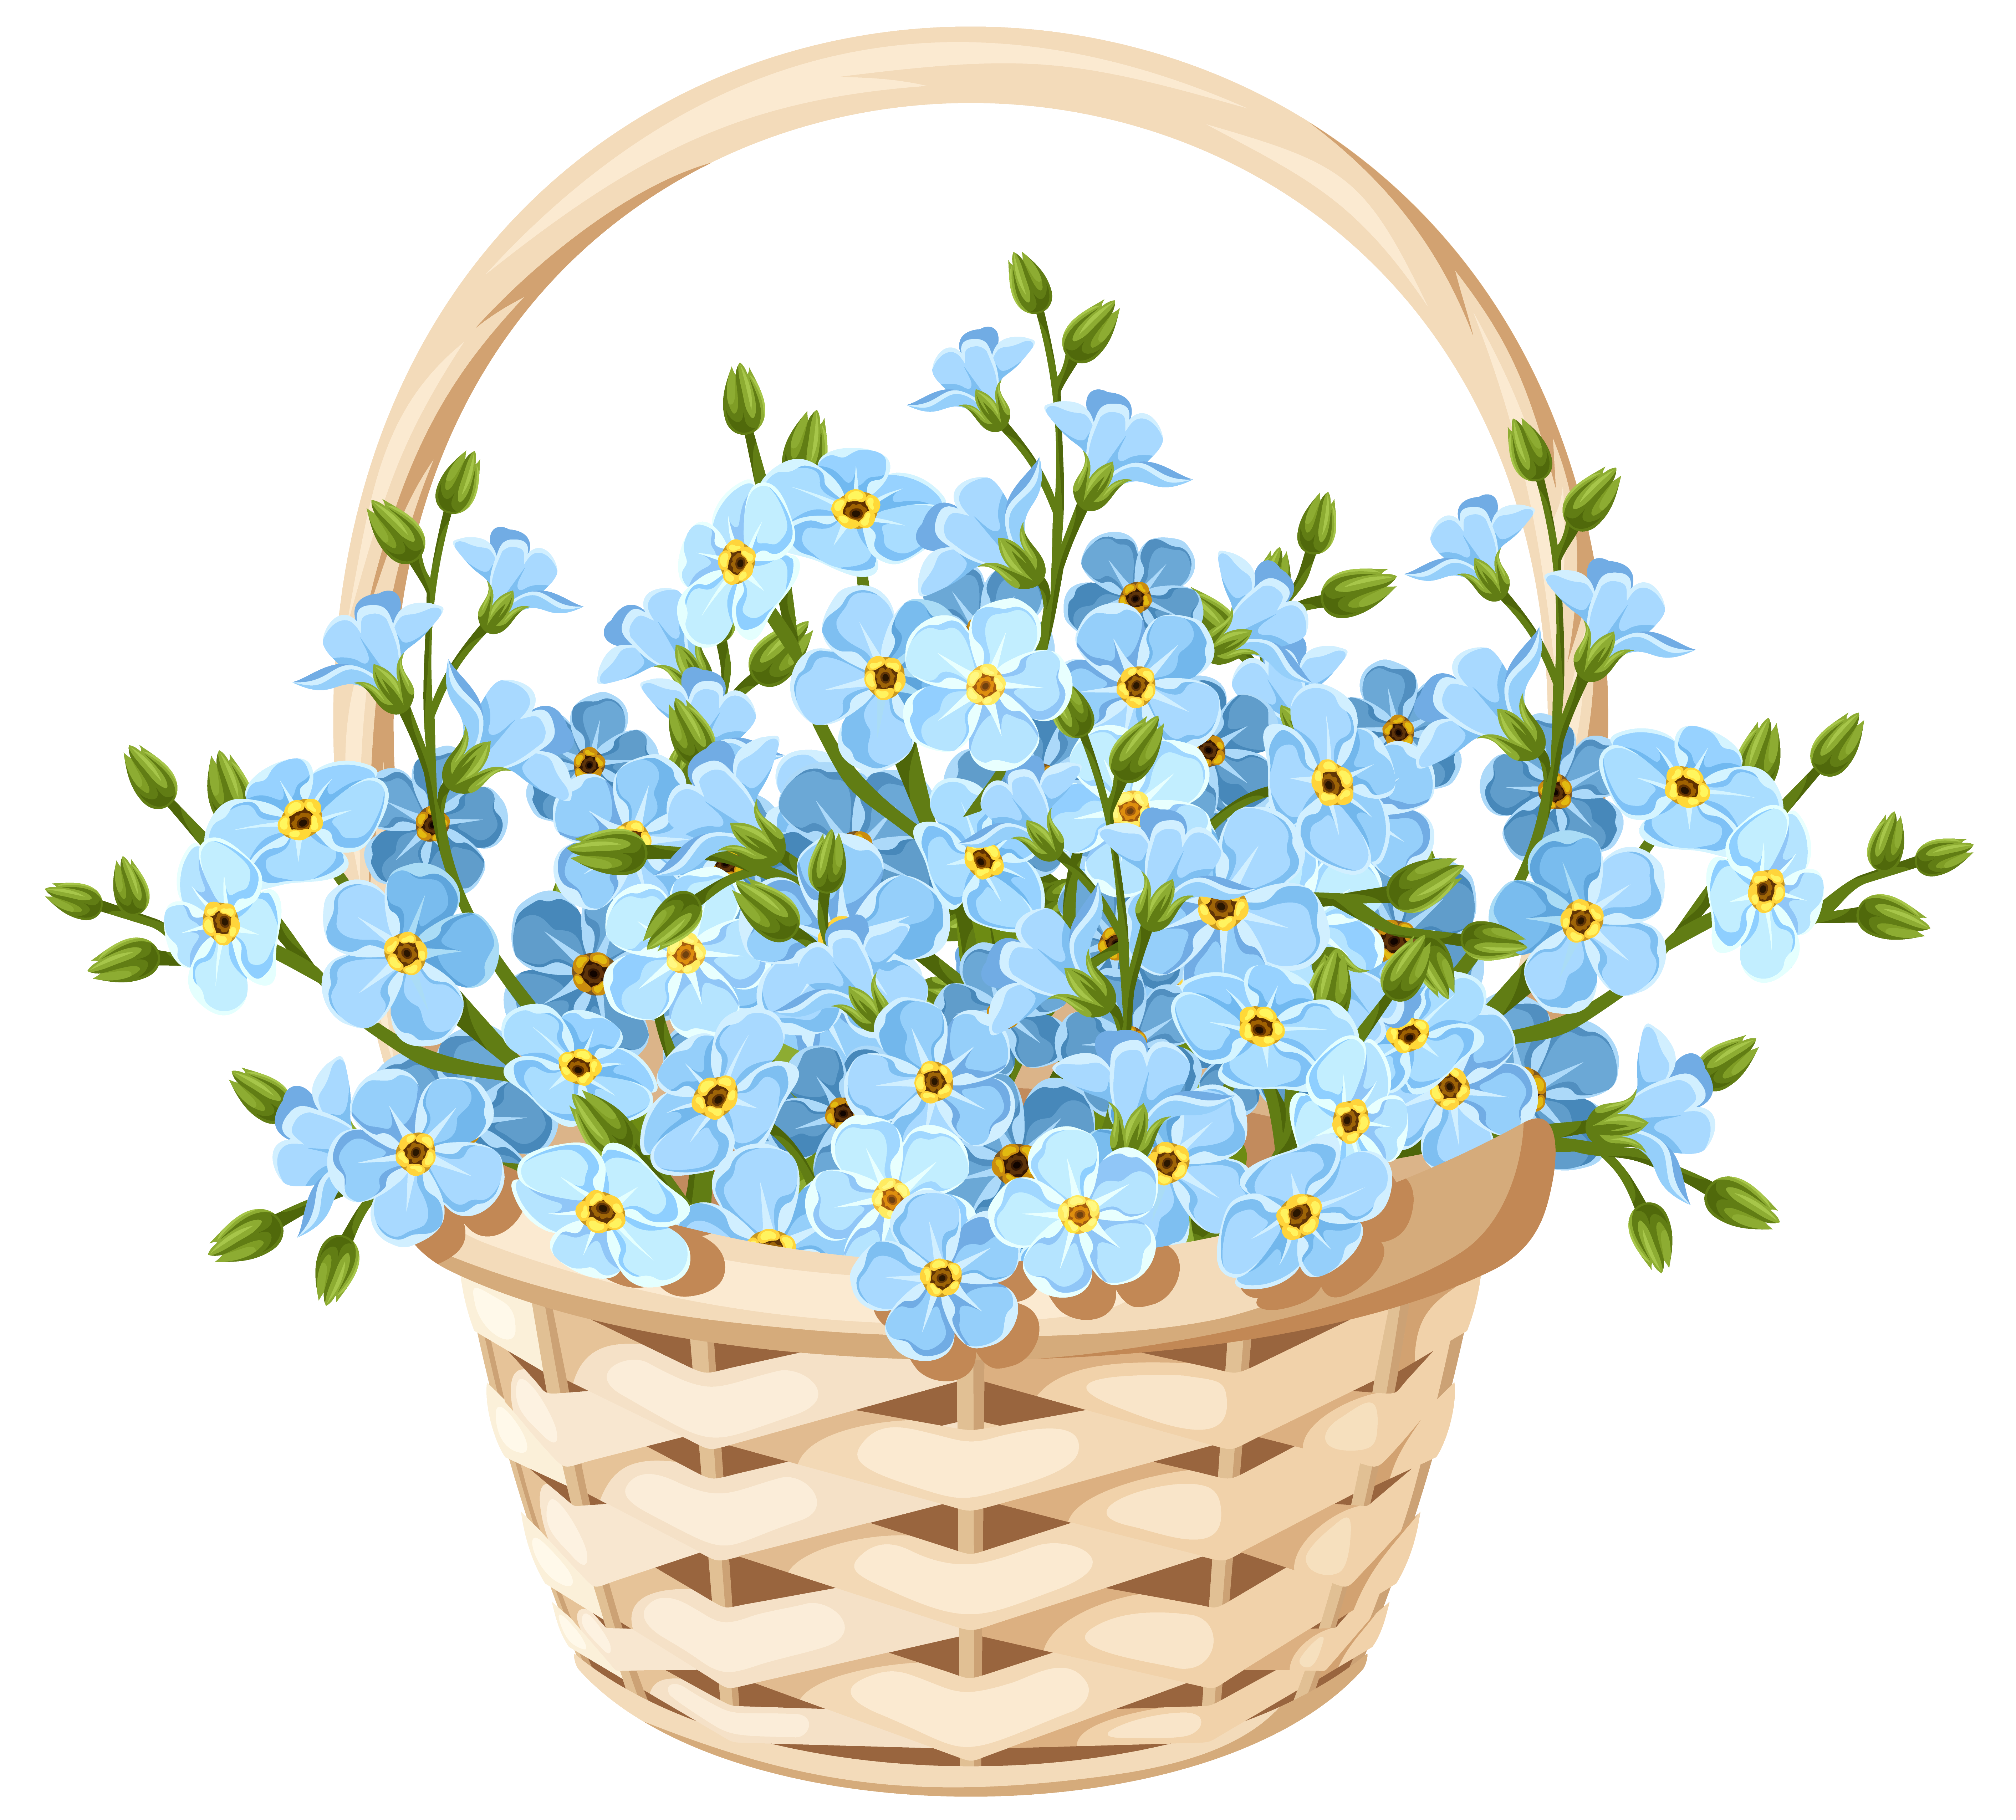 flower basket clipart - photo #37